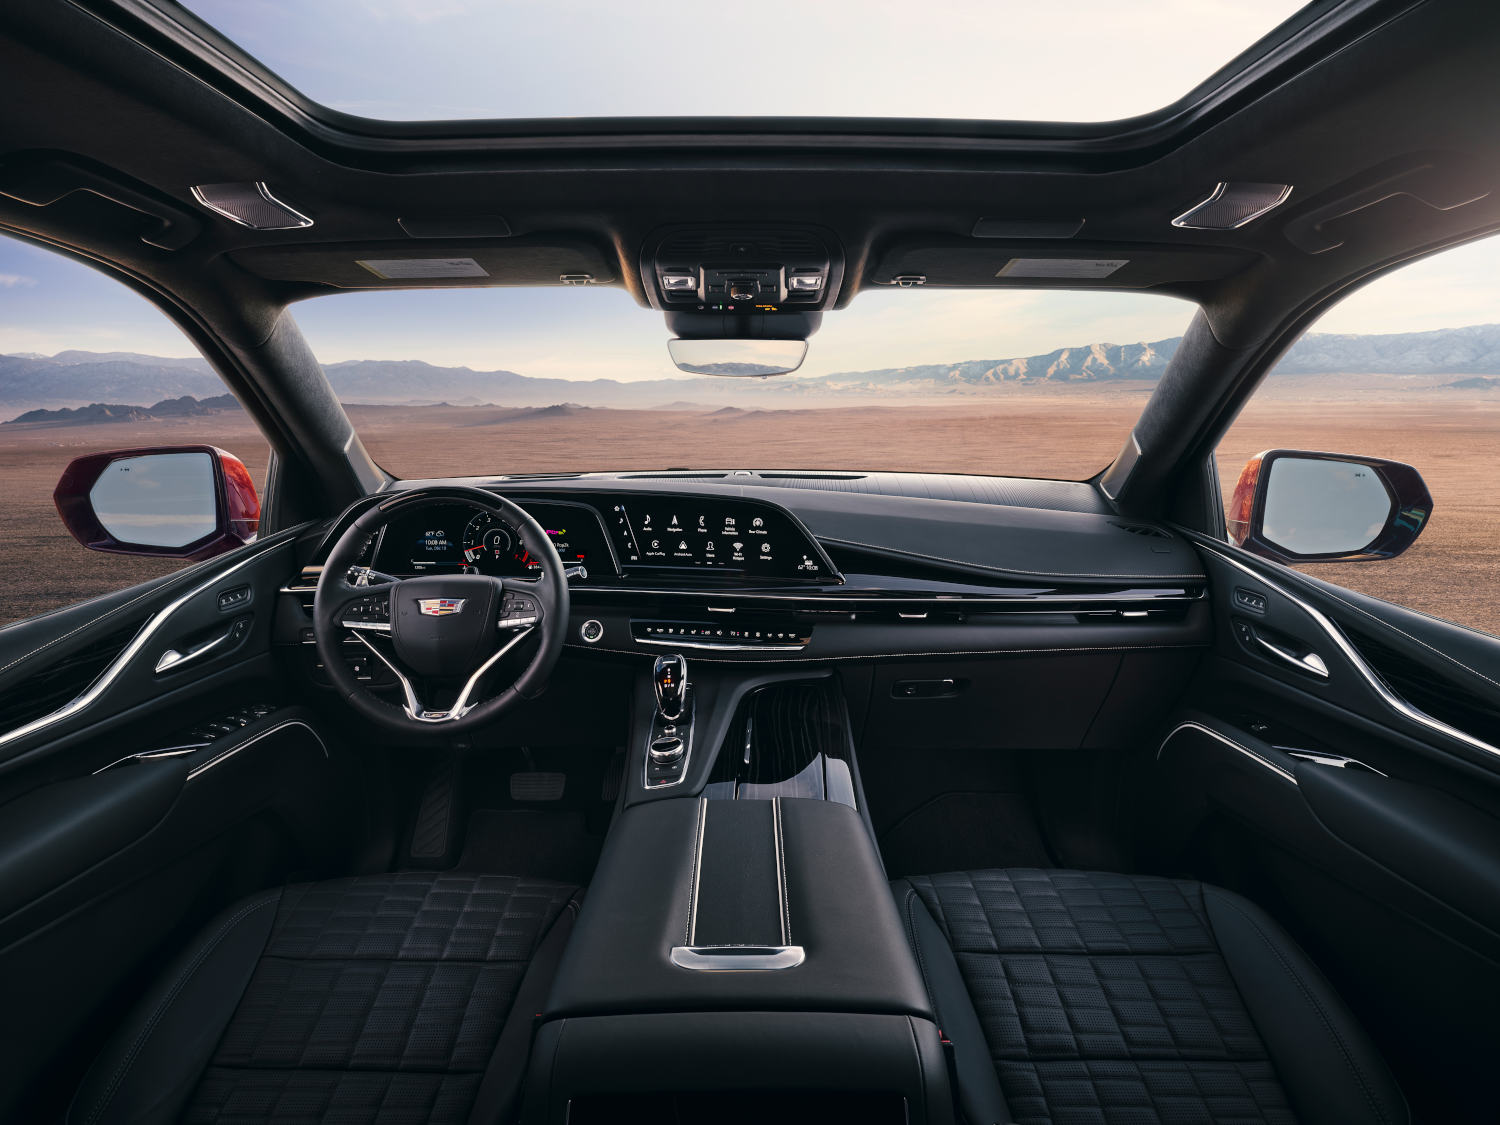 Inside the 2023 Cadillac Escalade luxury SUV